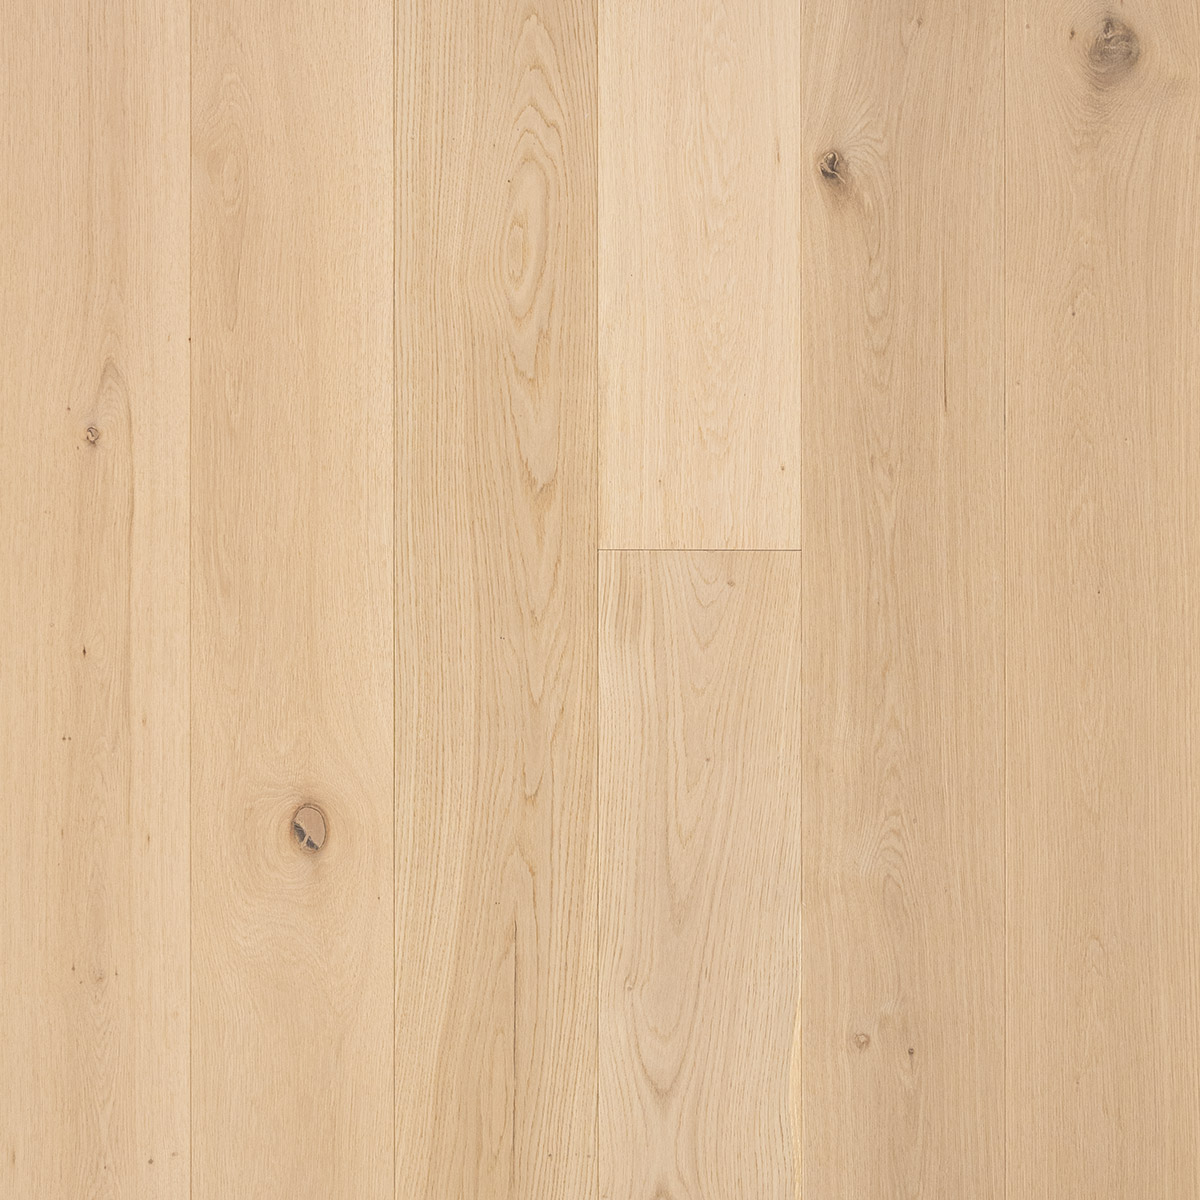 Multiply oak wood flooring named Essence Dawn Light